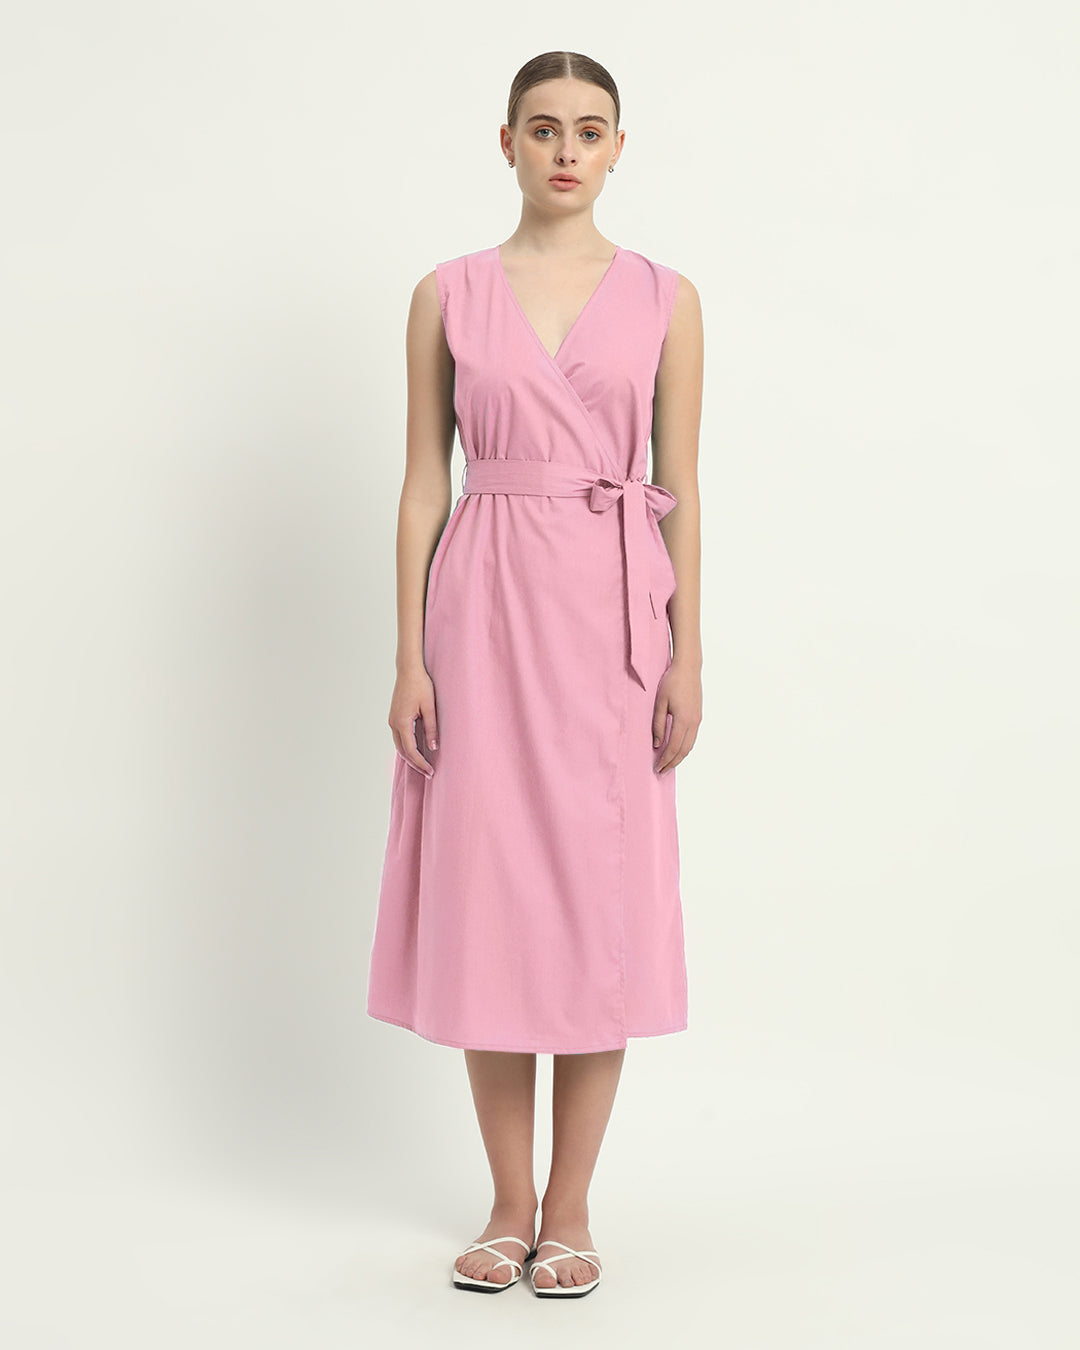 The Fondant Pink Windsor Cotton Dress